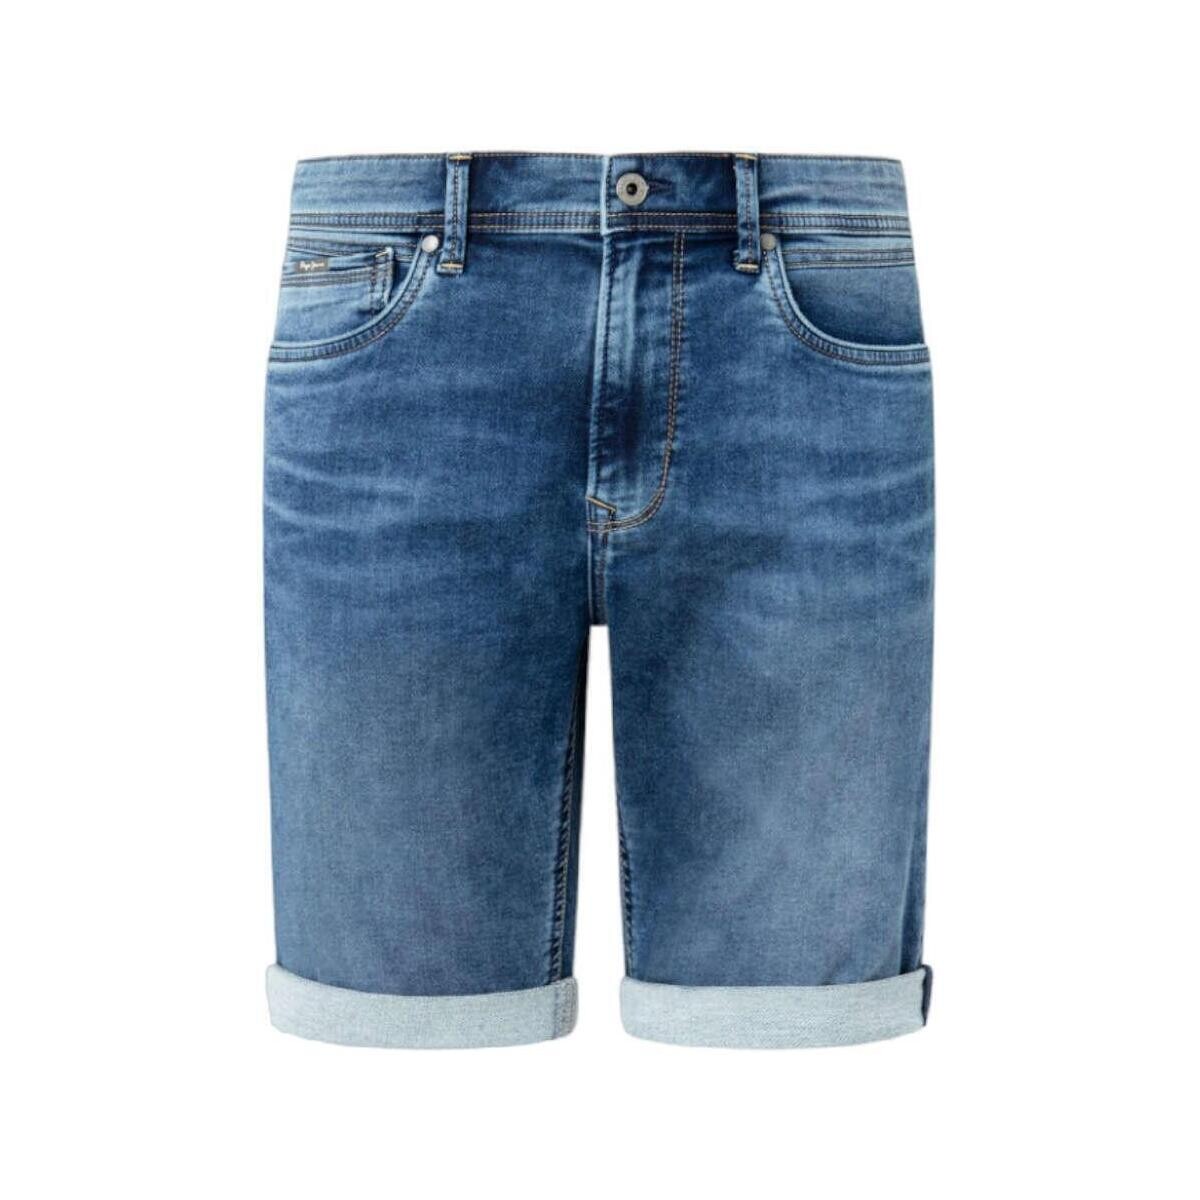 Shorts & Βερμούδες Pepe jeans –